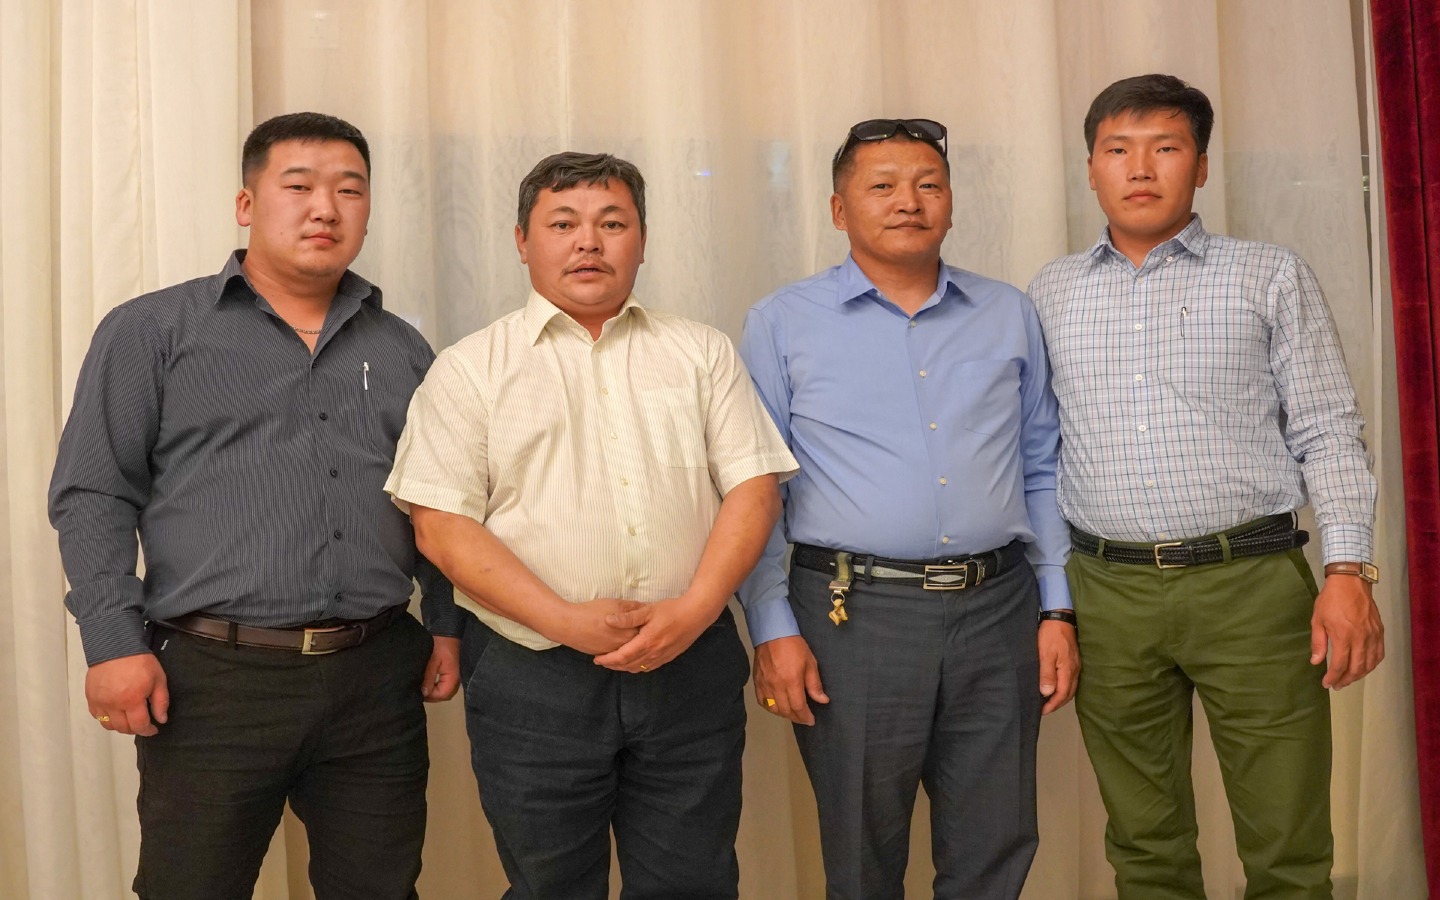 PTM's drivers | Premium Travel Mongolia